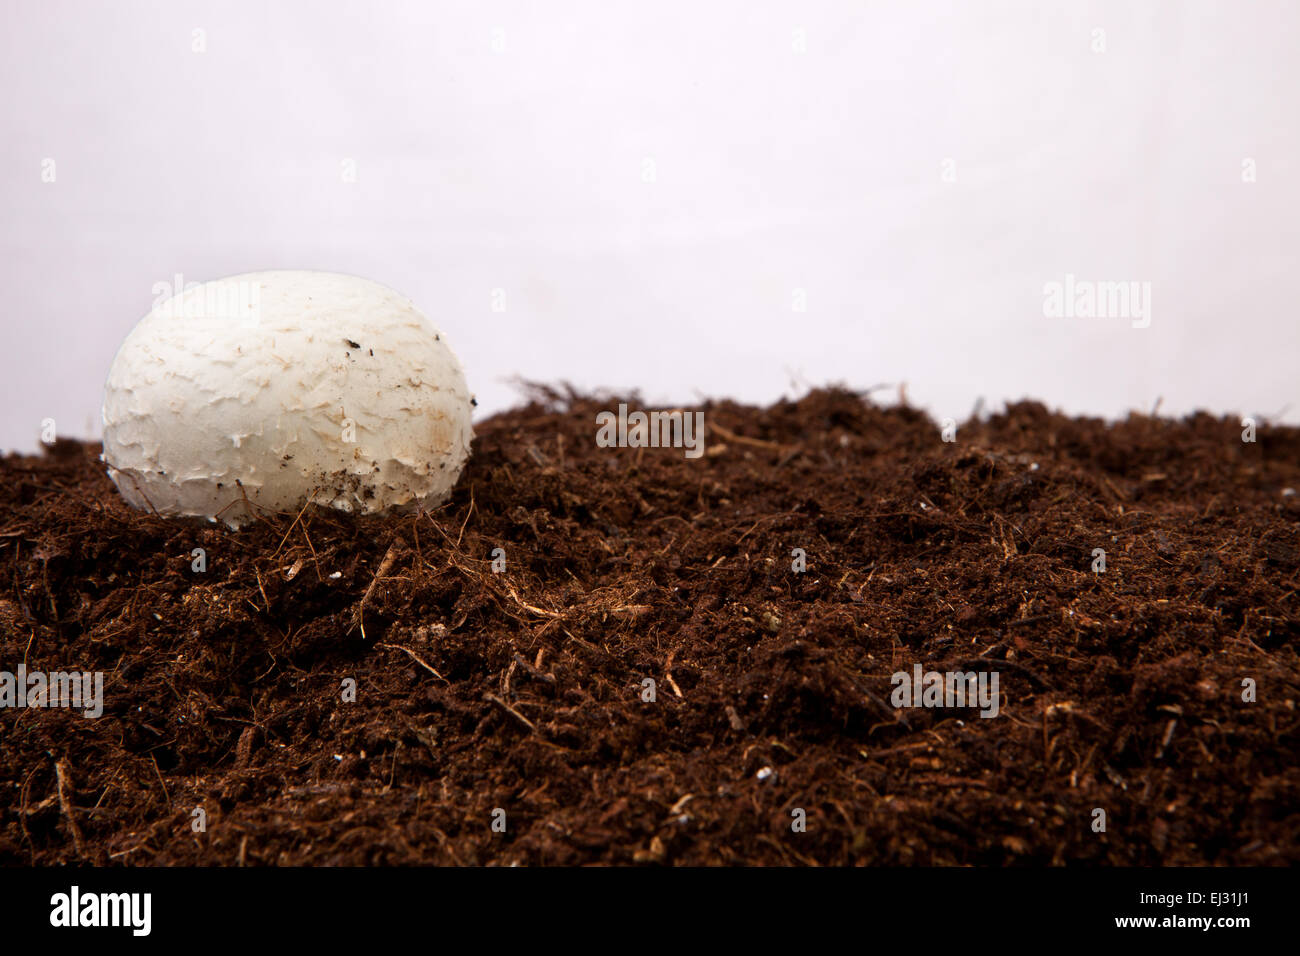 White mushroom growing over black soil. Isolated over white background Stock Photo